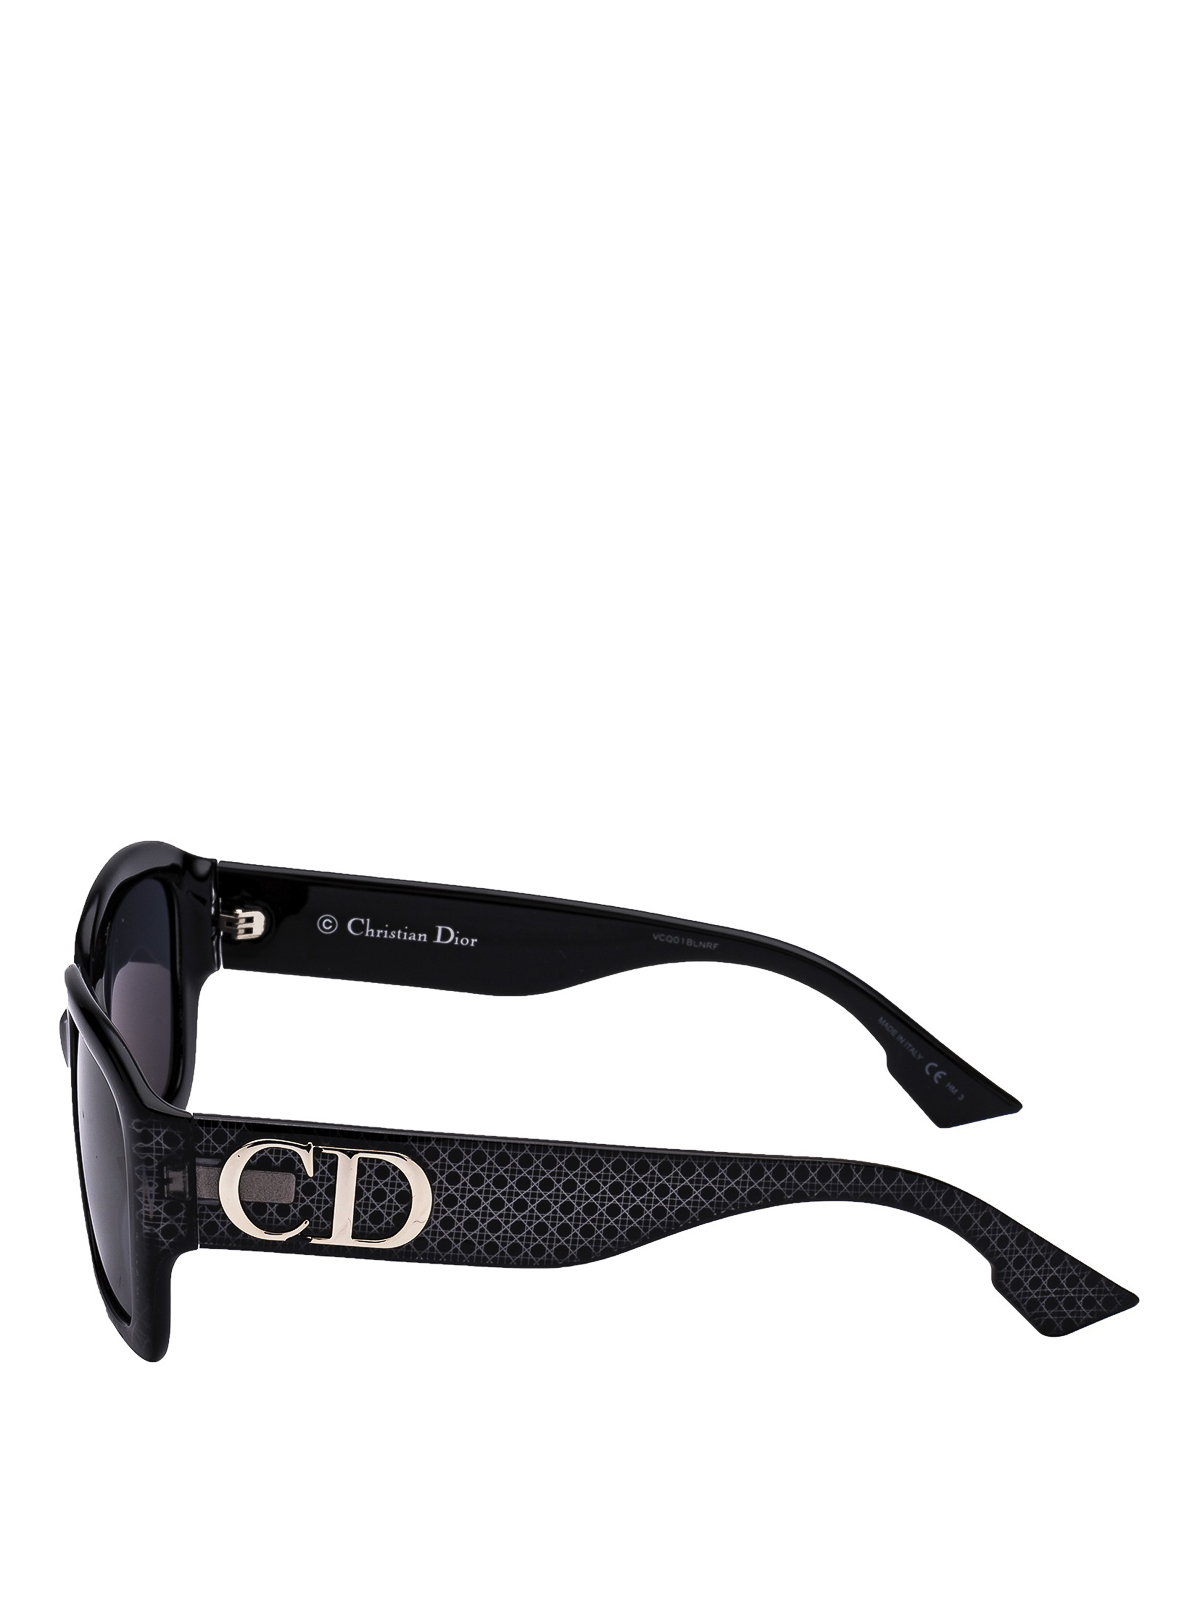 dior geometric sunglasses